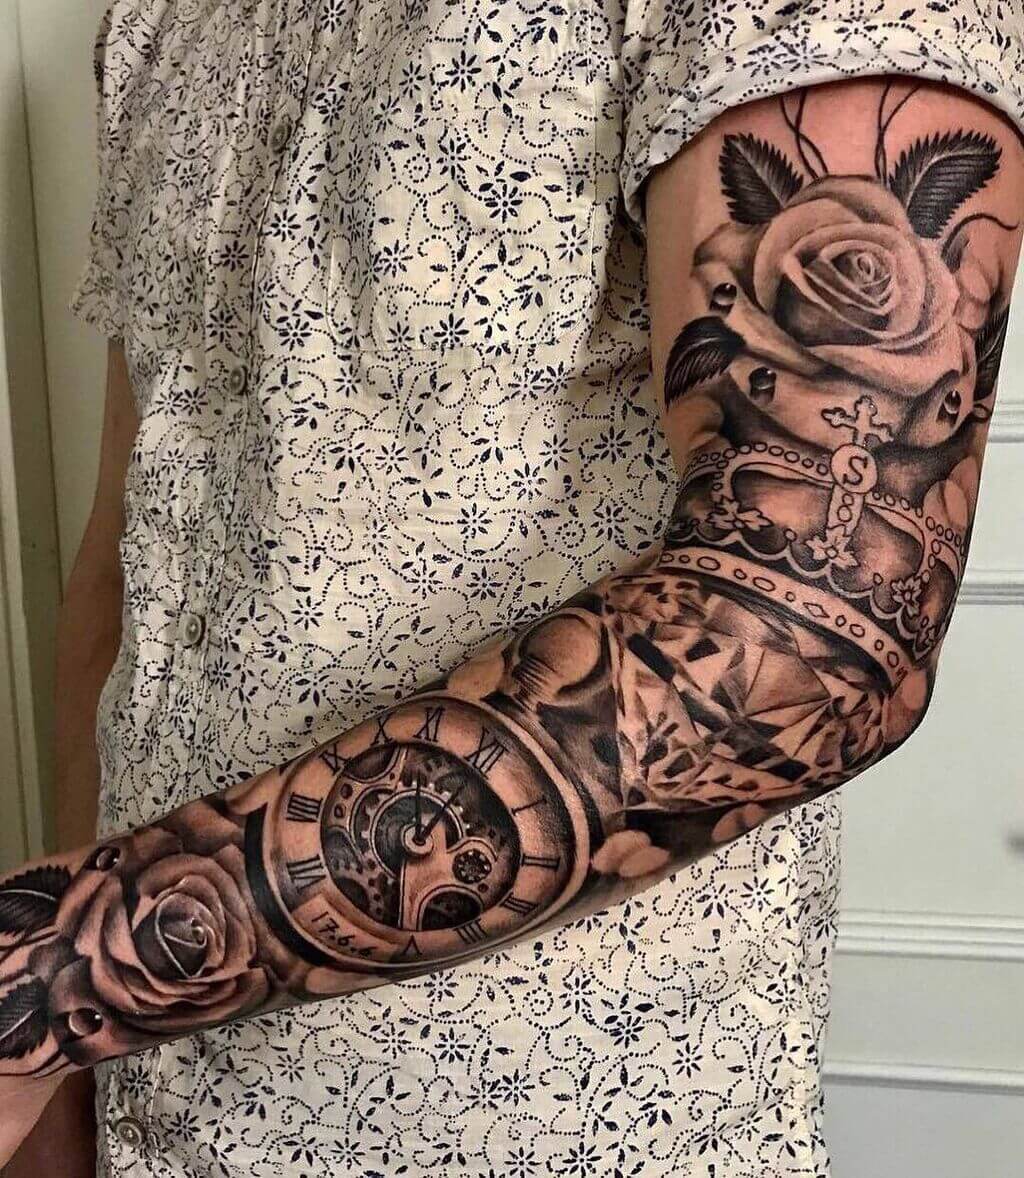 Flower Forearm Tattoo